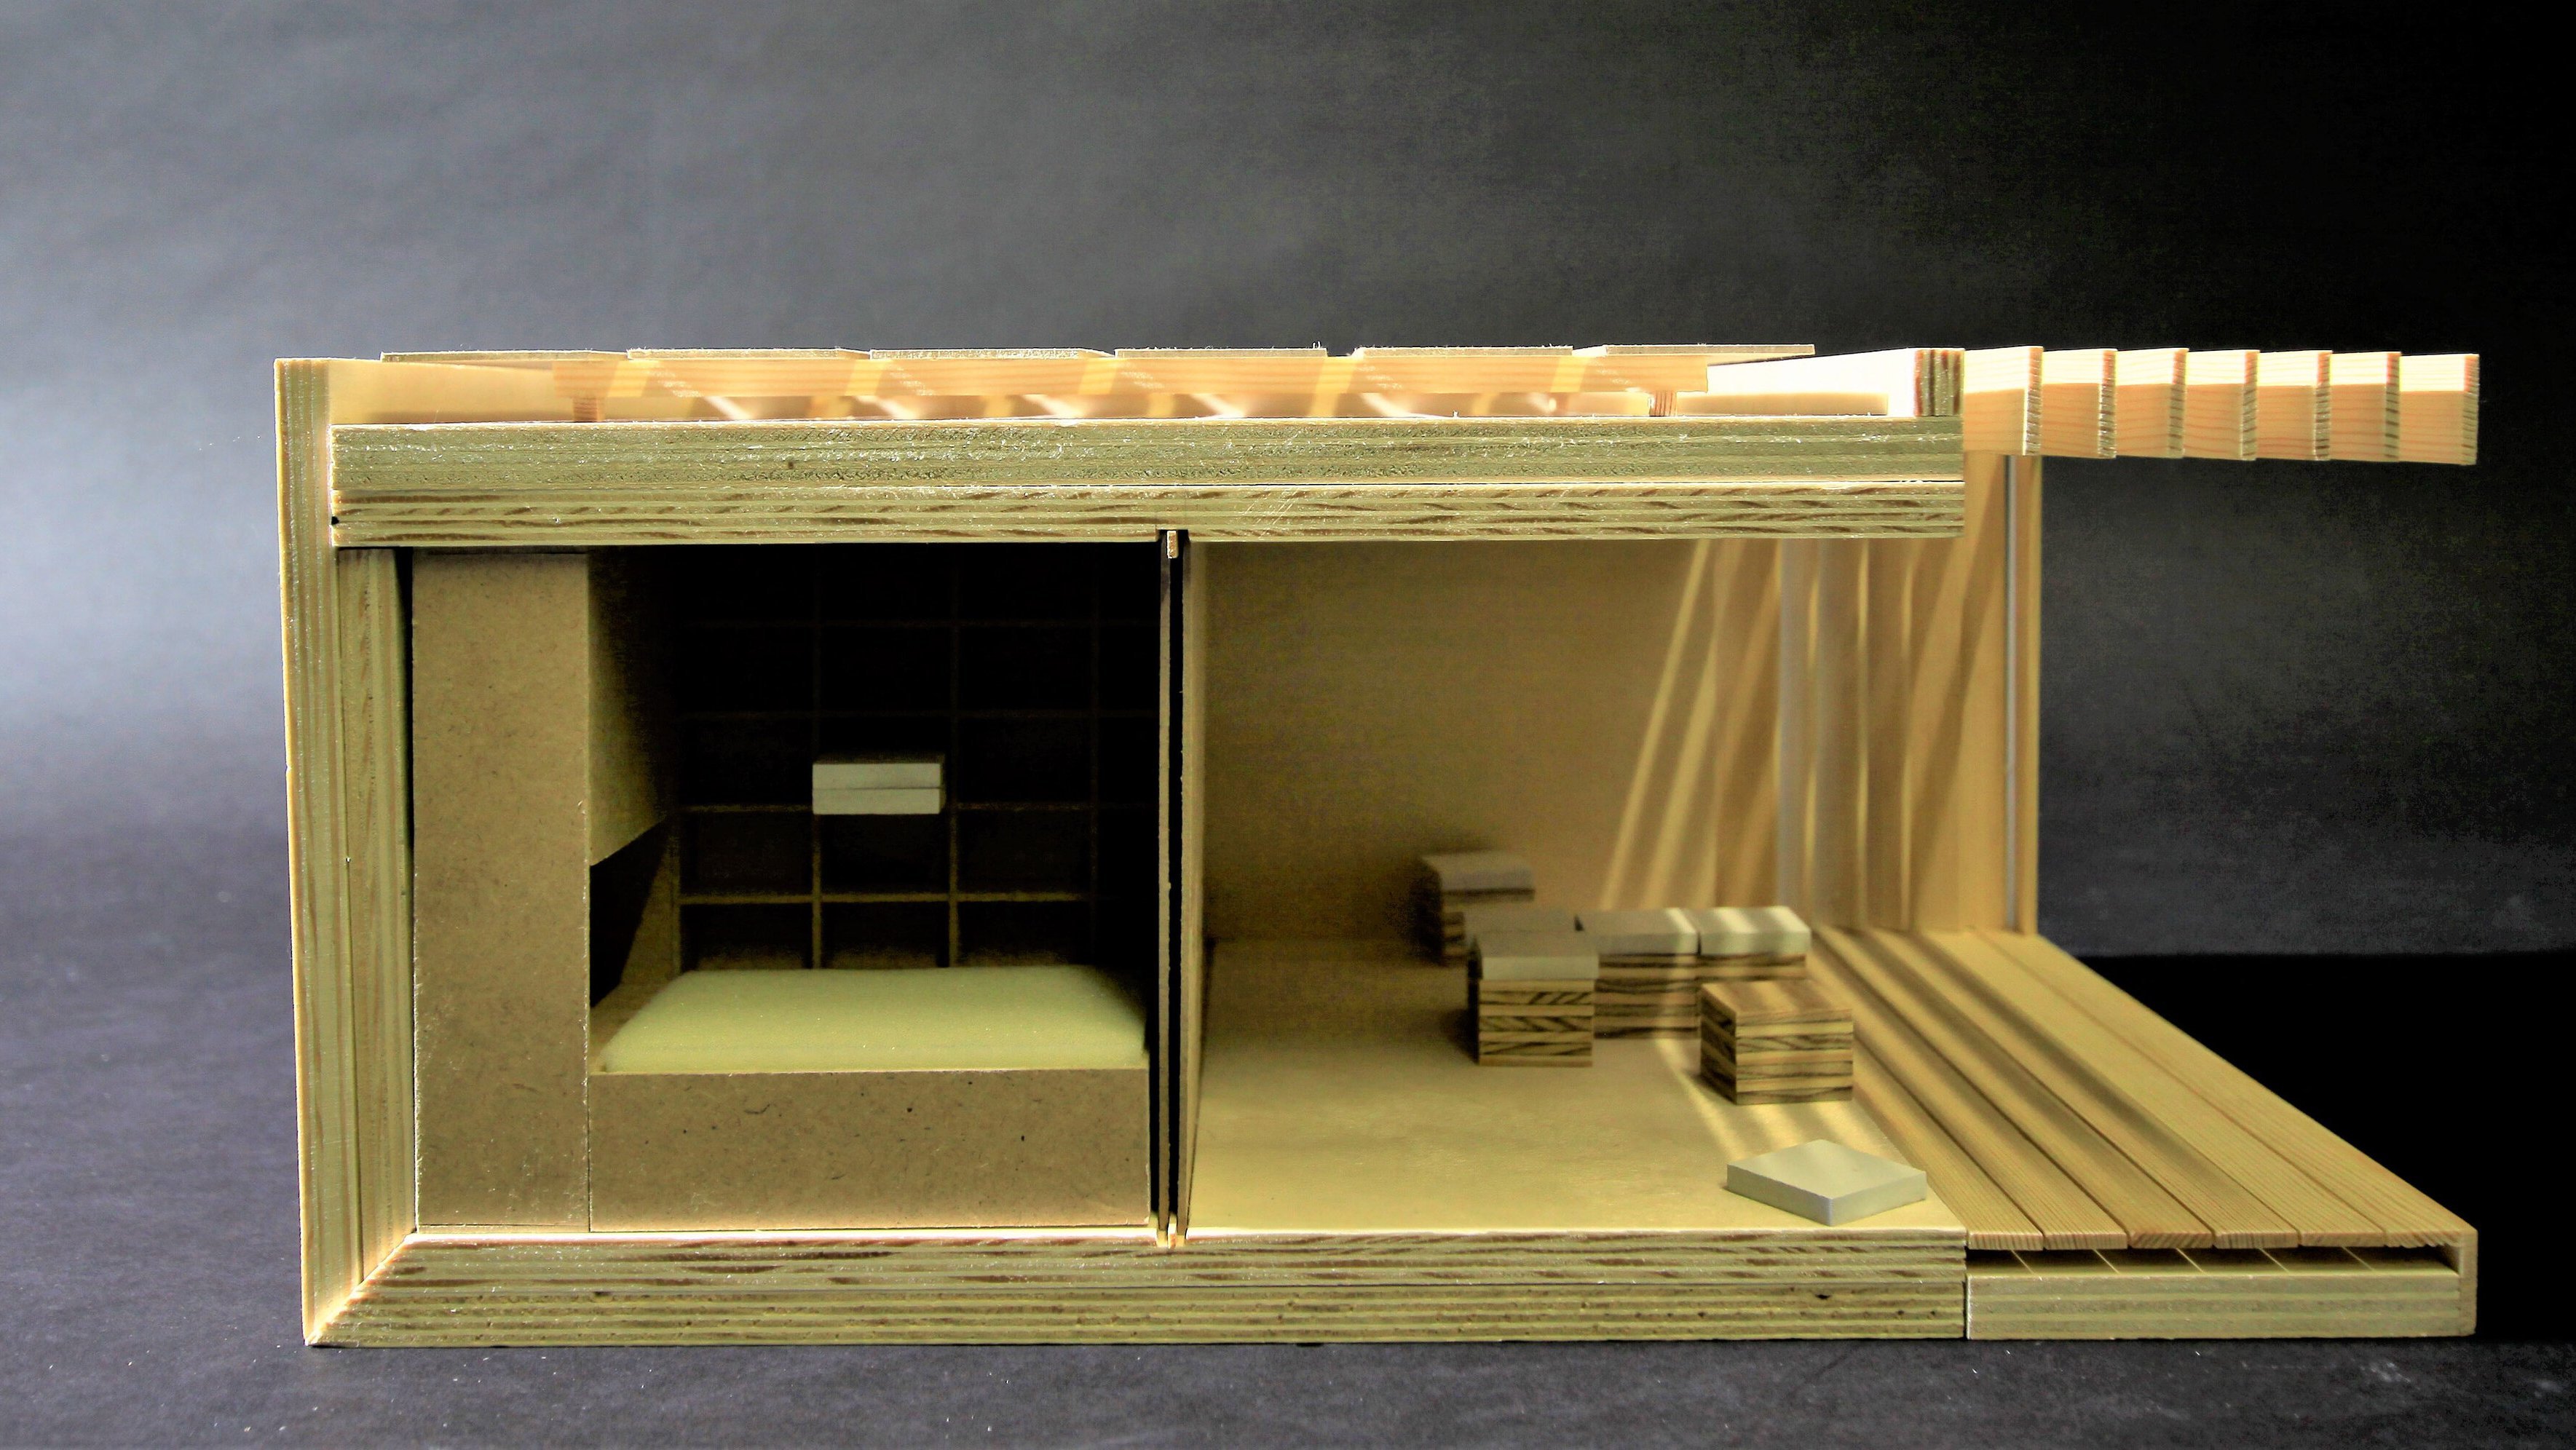 Modell eines Holzbauprojekts